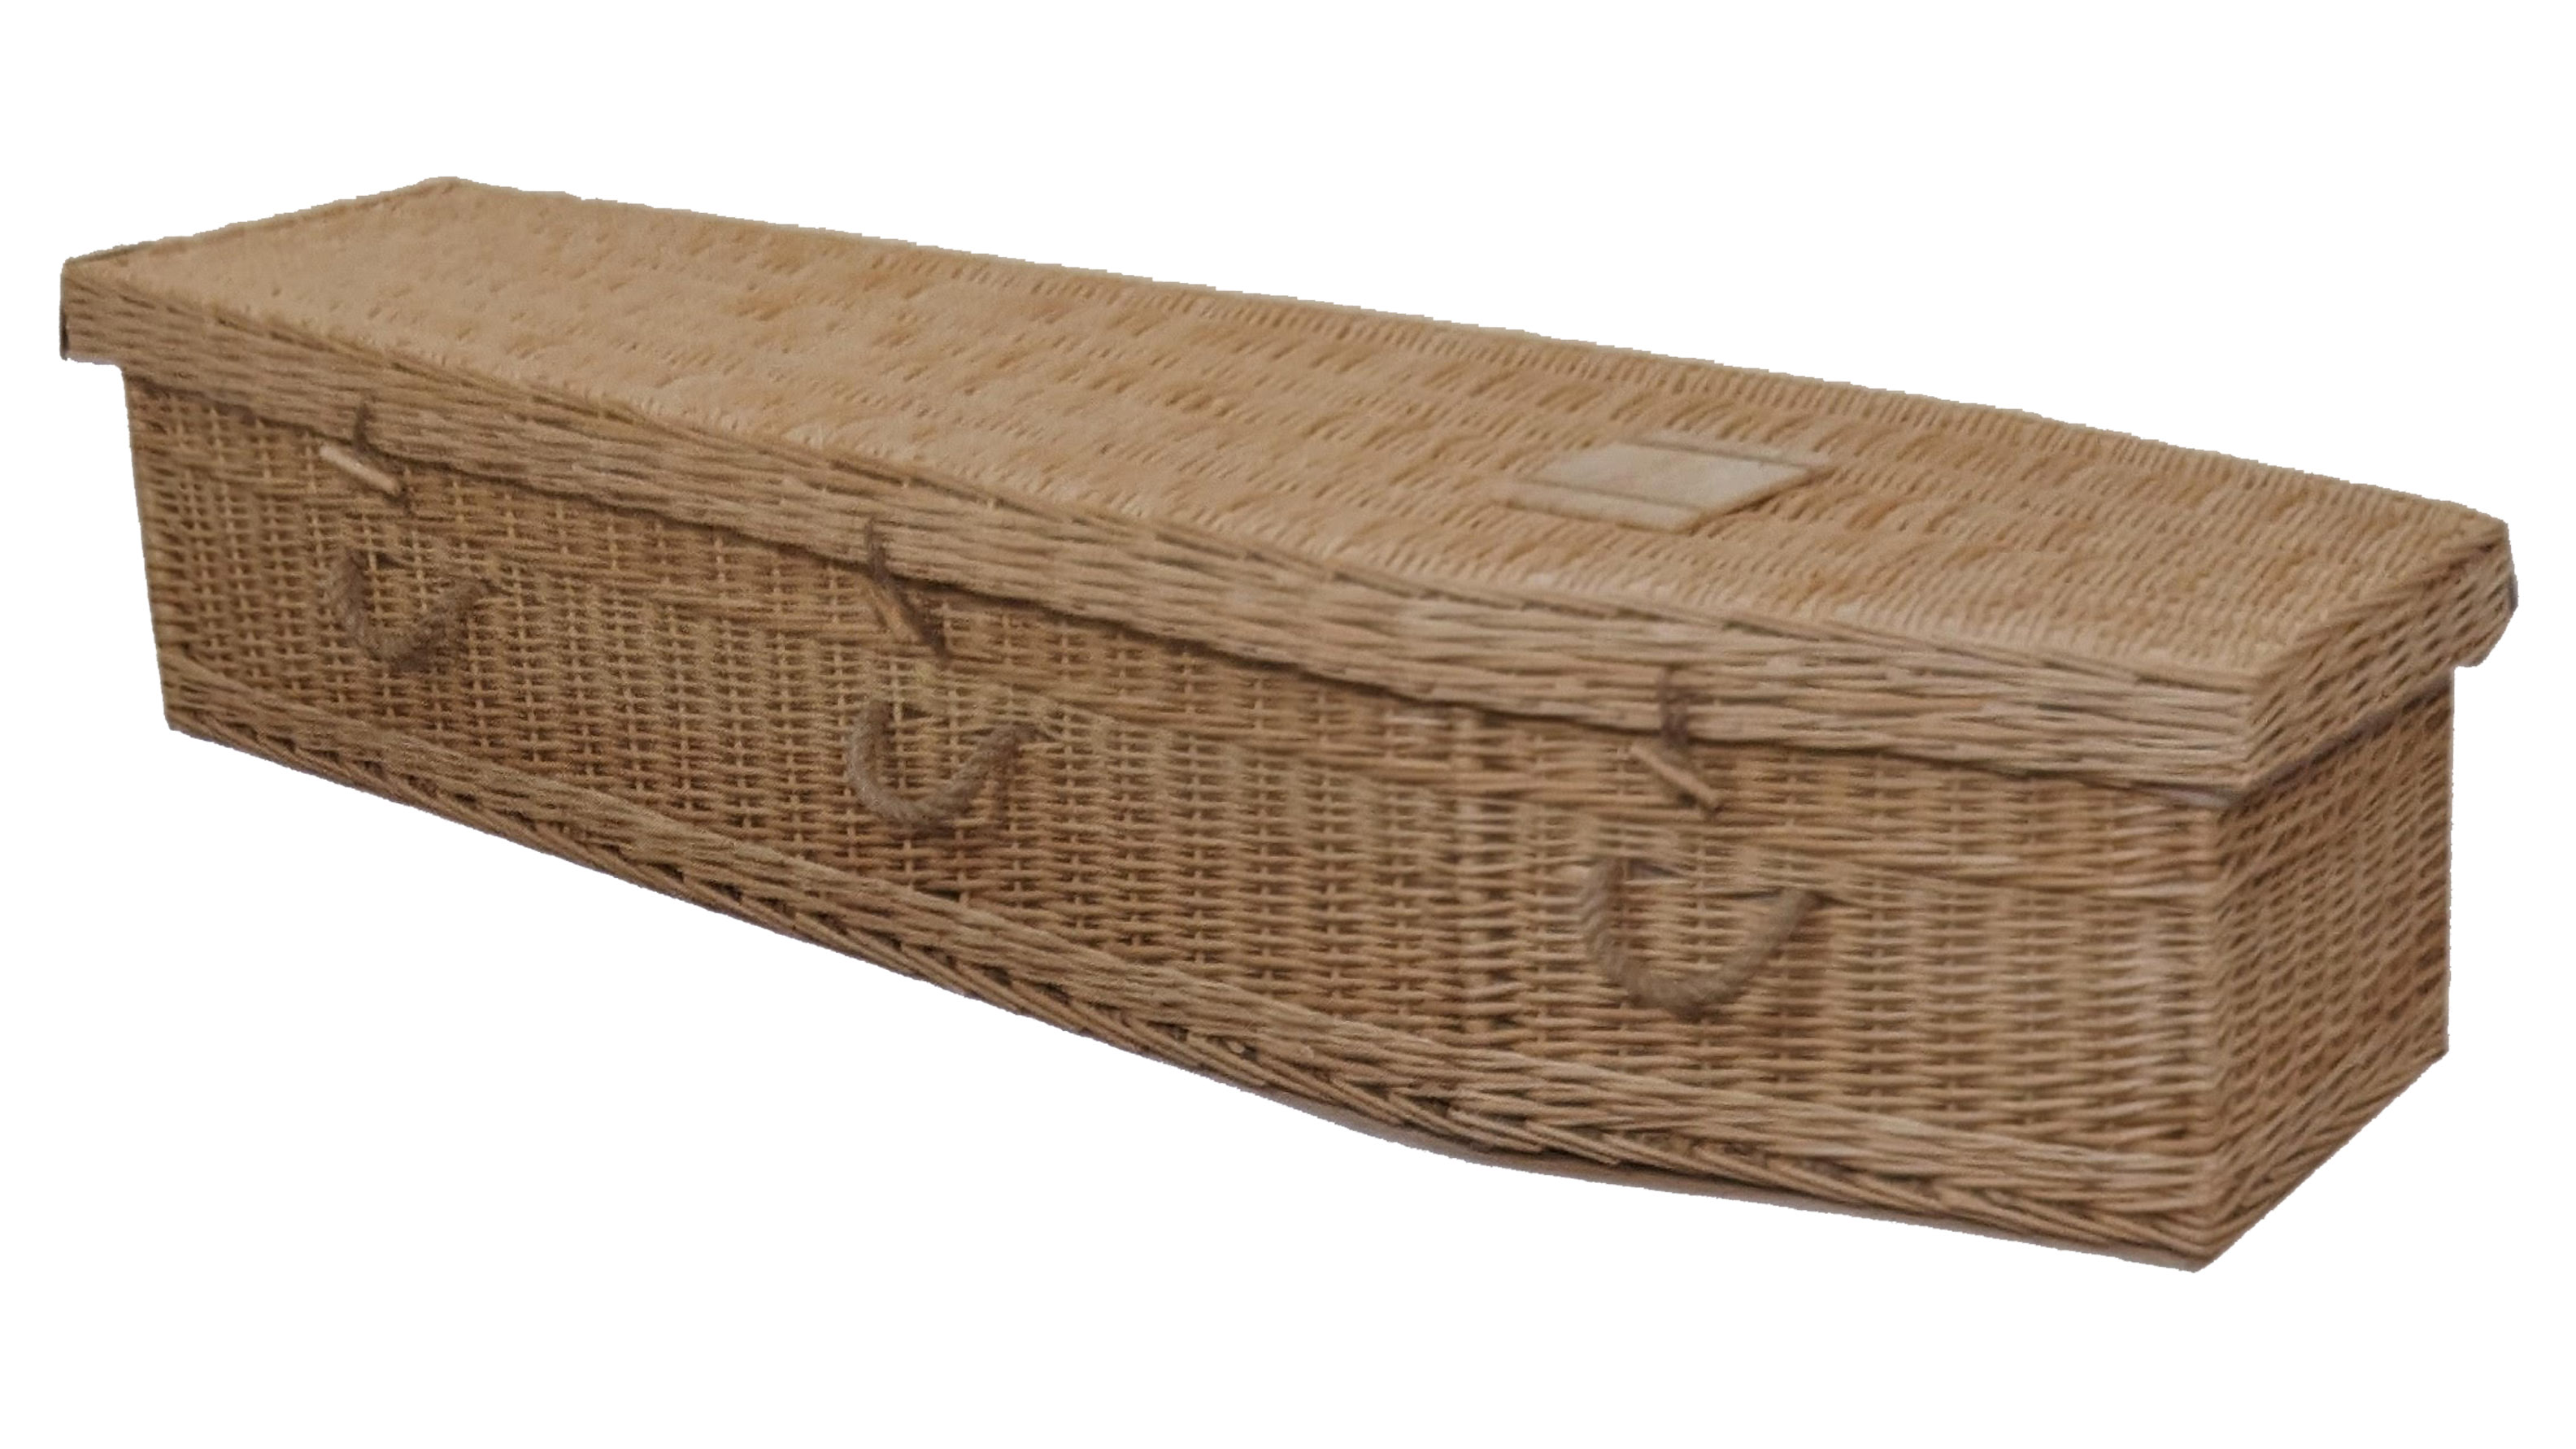 The Larkspur coffin